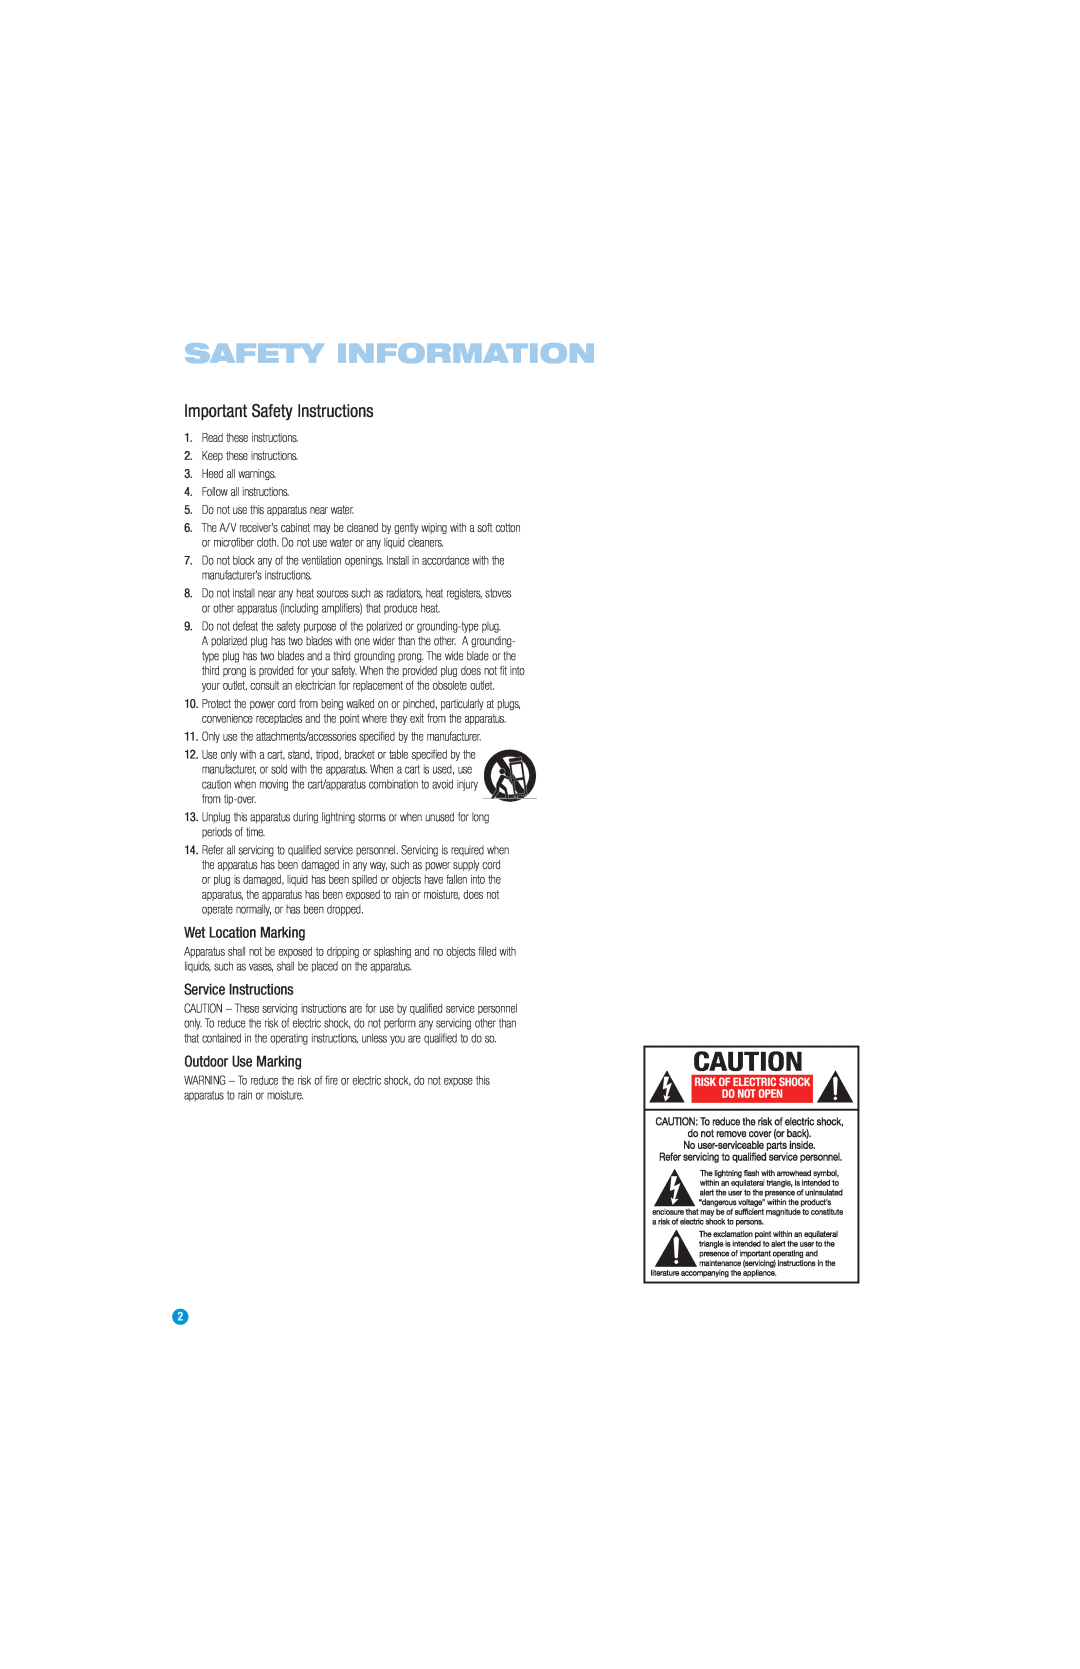 Harman-Kardon HK3490 Safety Information, Important Safety Instructions, Wet Location Marking, Service Instructions 